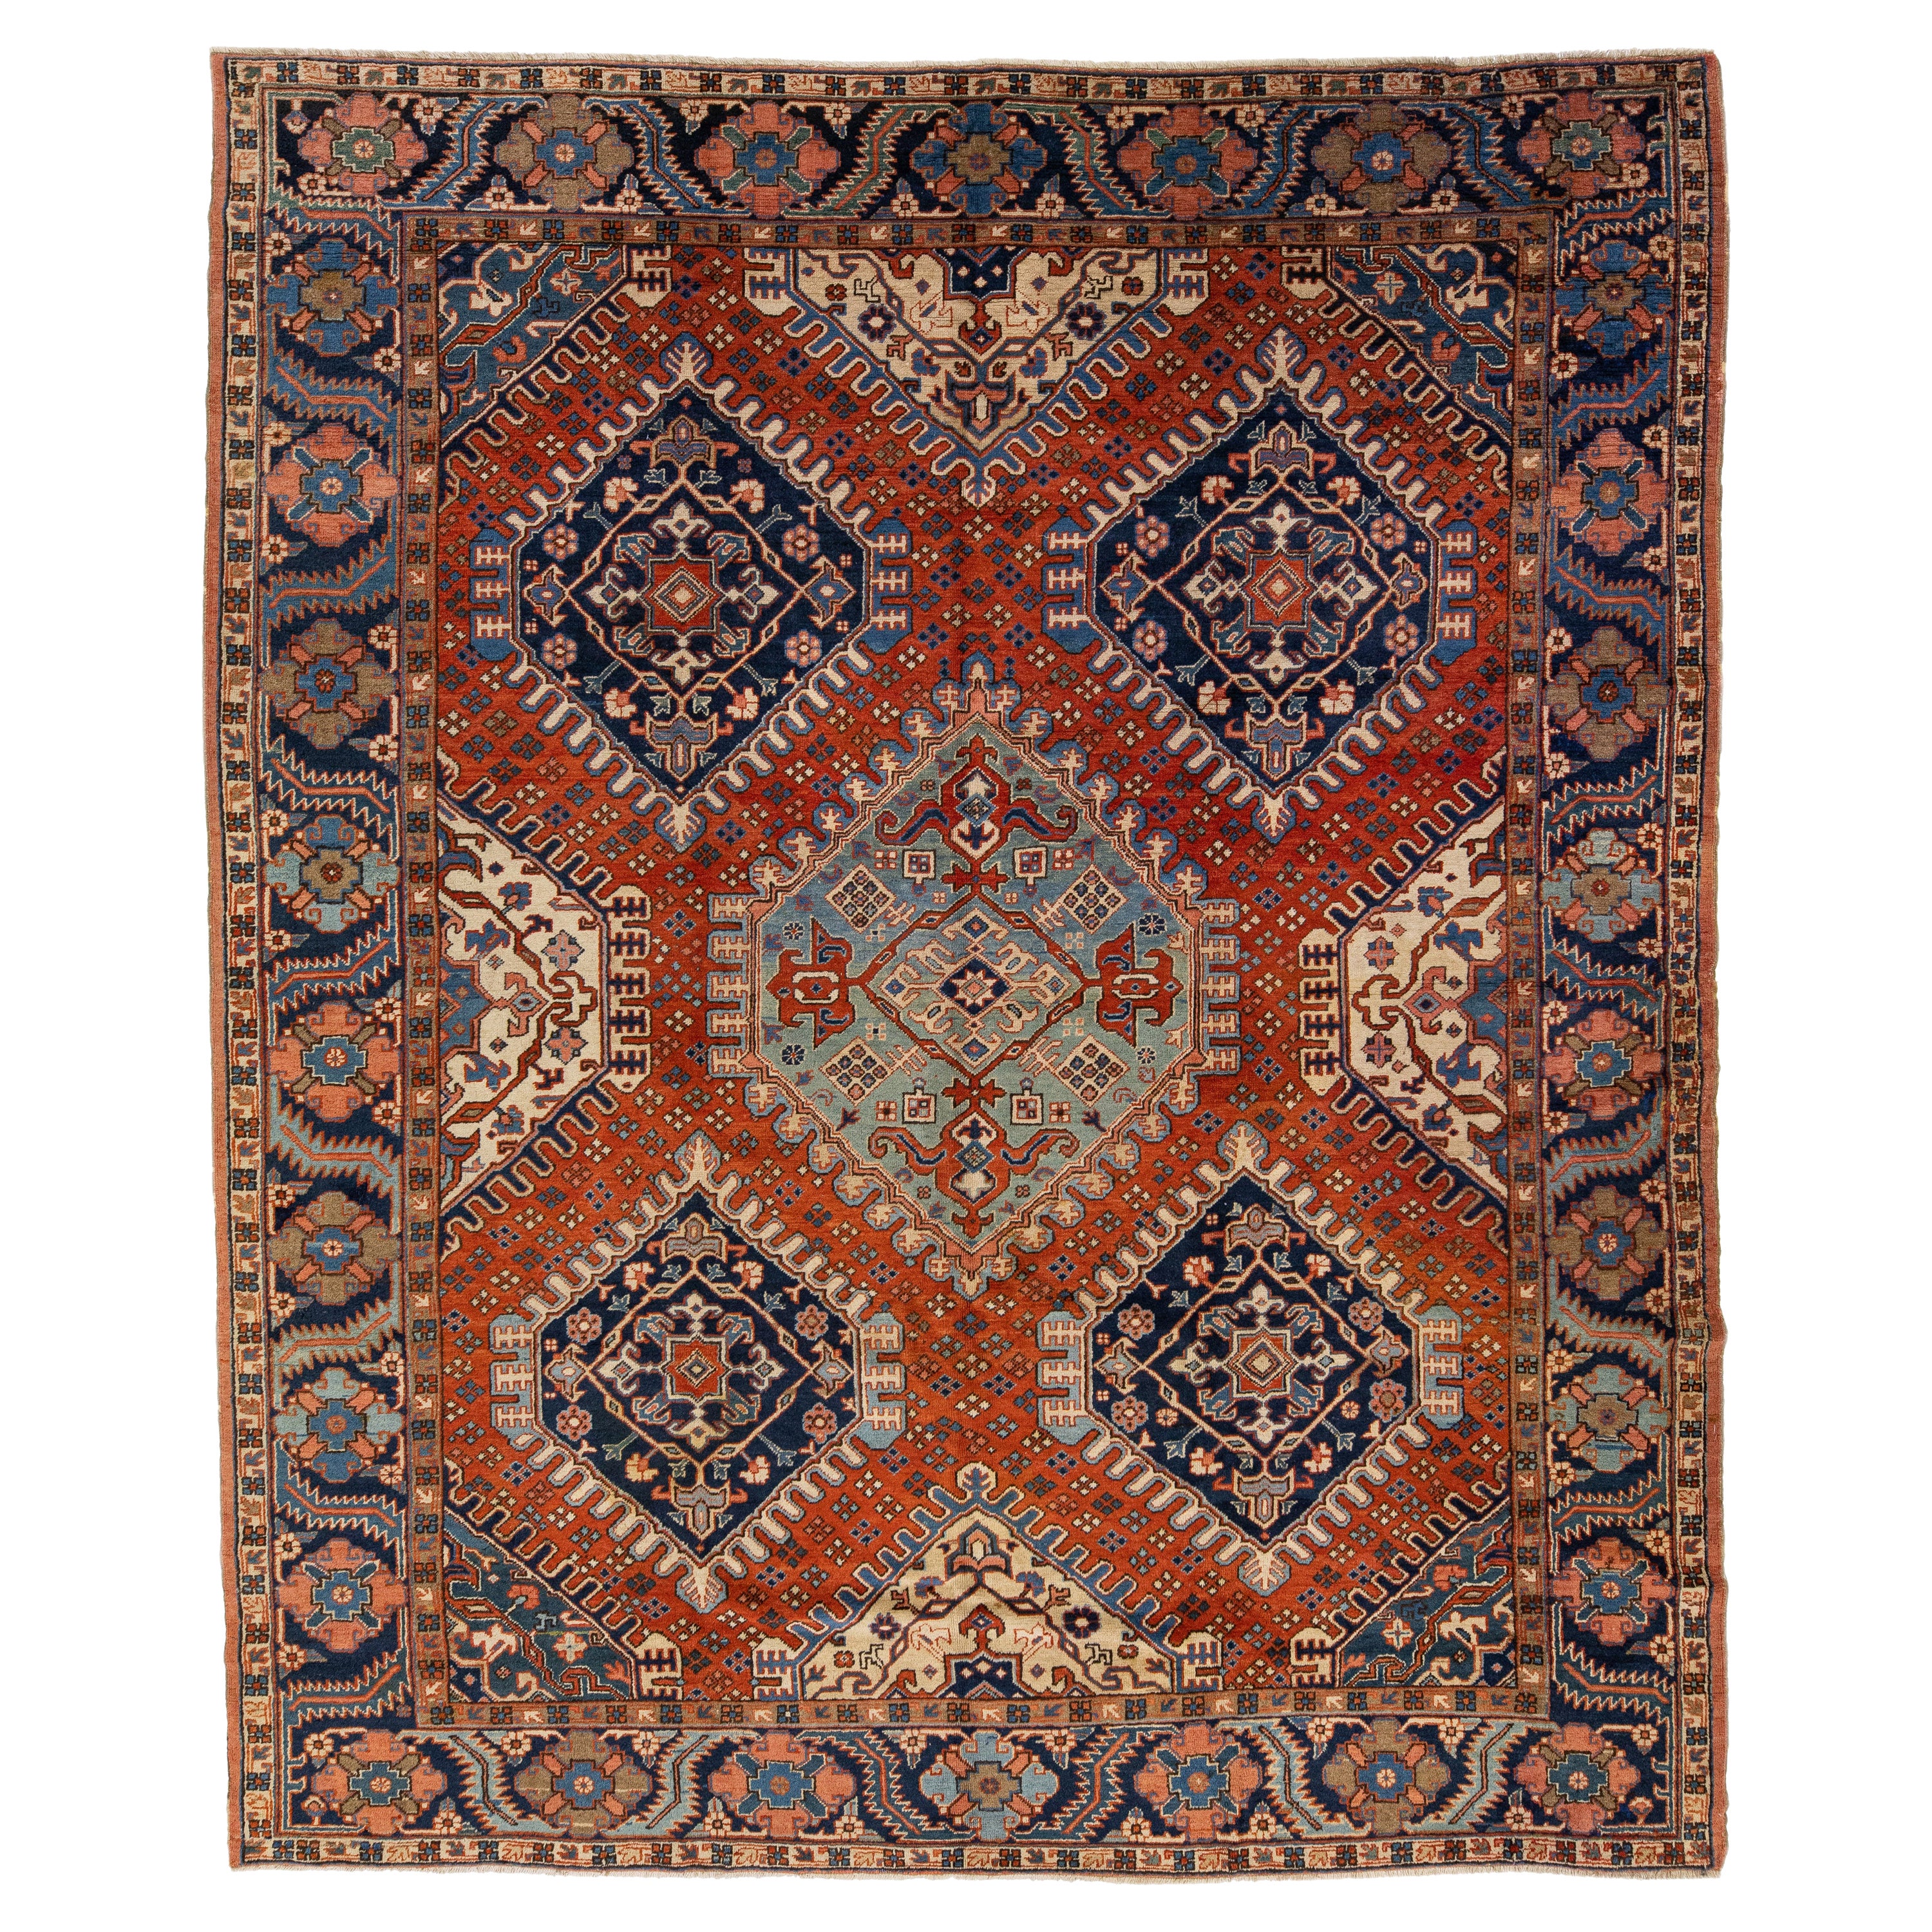  Antique Geometric Persian Heriz Handmade Wool Rug with Orange Rust Field For Sale